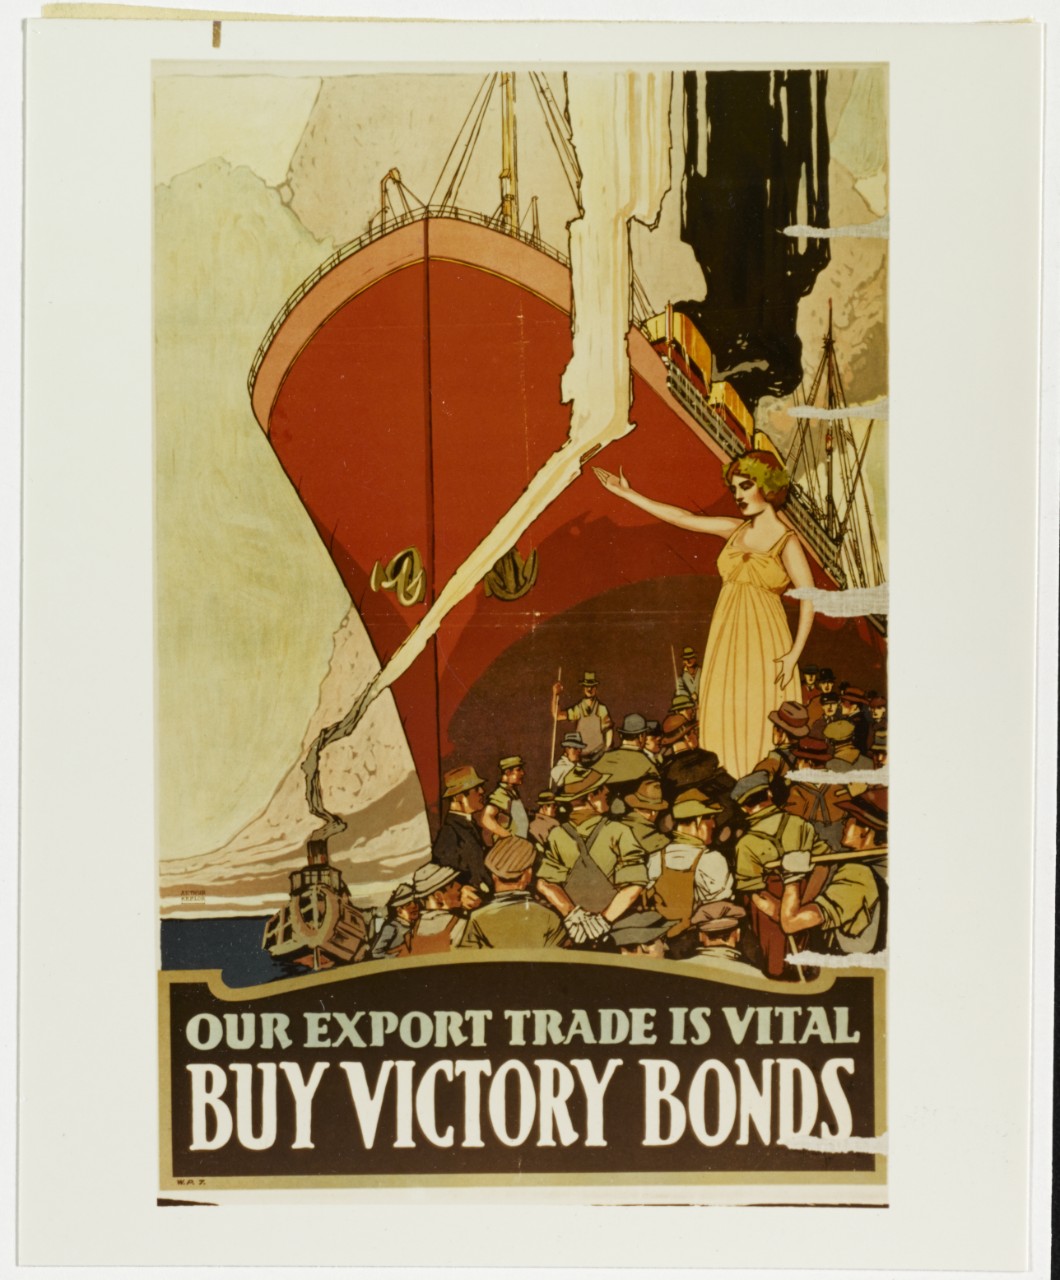 World War I bond poster